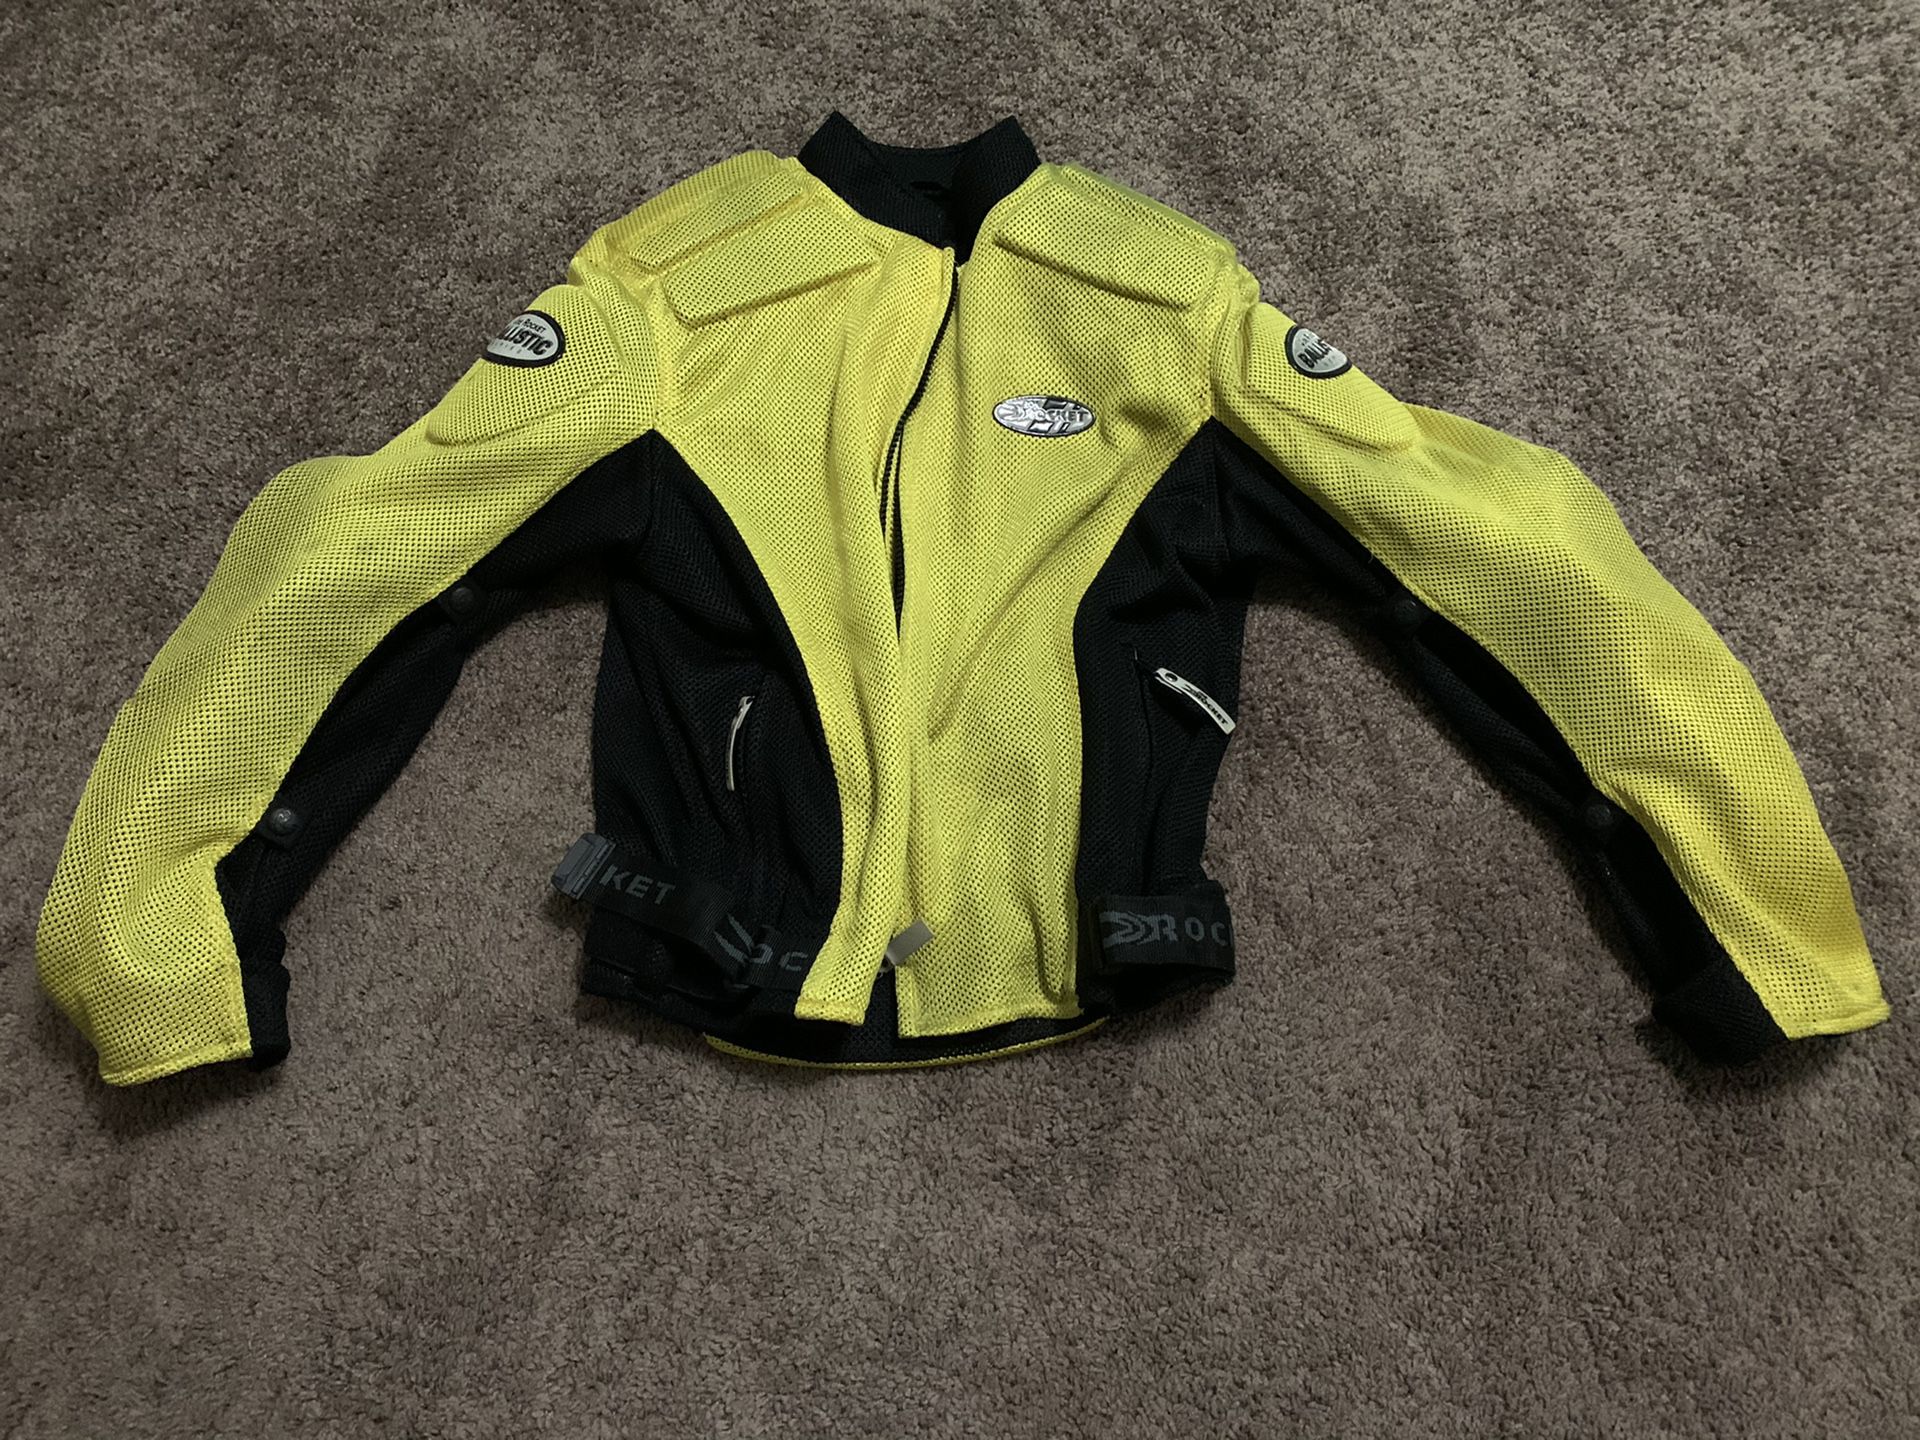 Joe rocket Motorcycle jacket size M